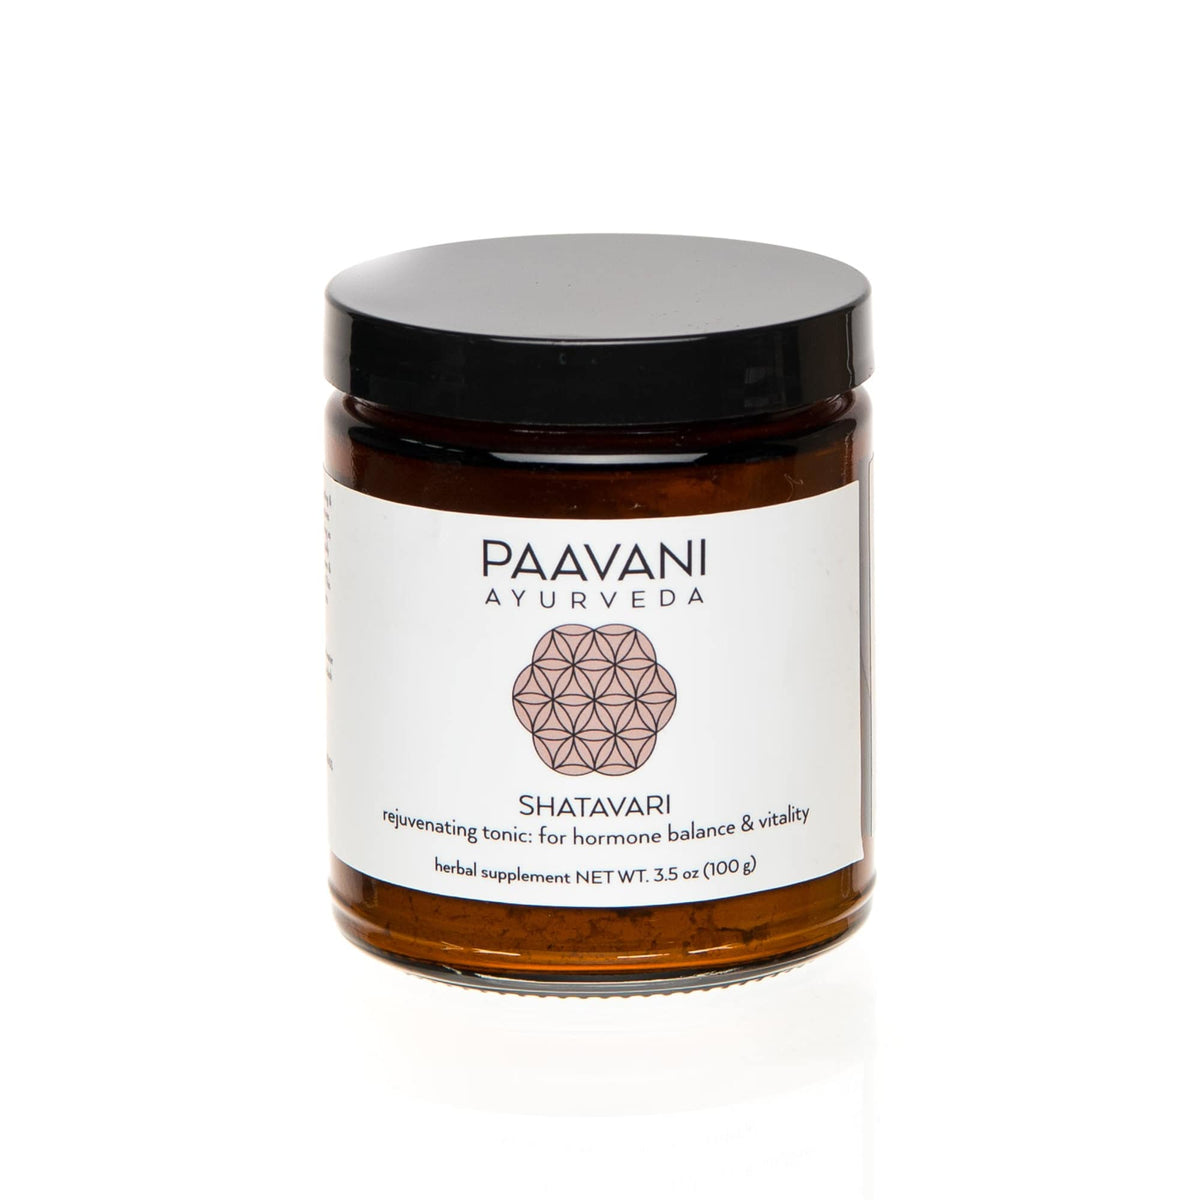 Paavani Ayurveda - Organic Shatavari, Rejuvenating Tonic for Hormone Balance and Vitality, Queen of Ayurvedic Herbs 9 oz.